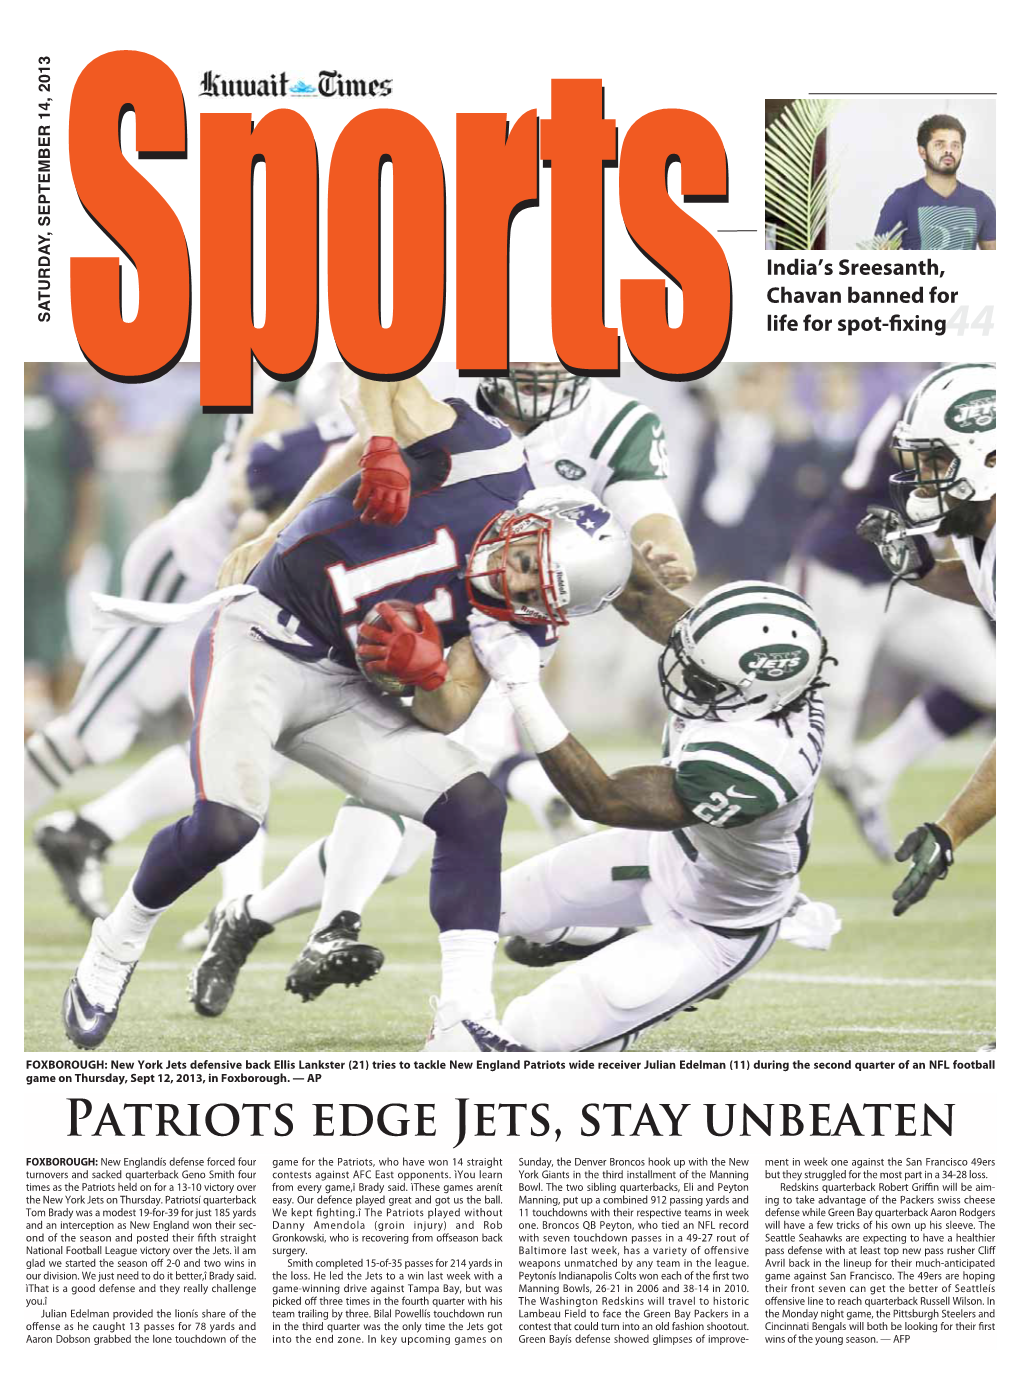 Patriots Edge Jets, Stay Unbeaten